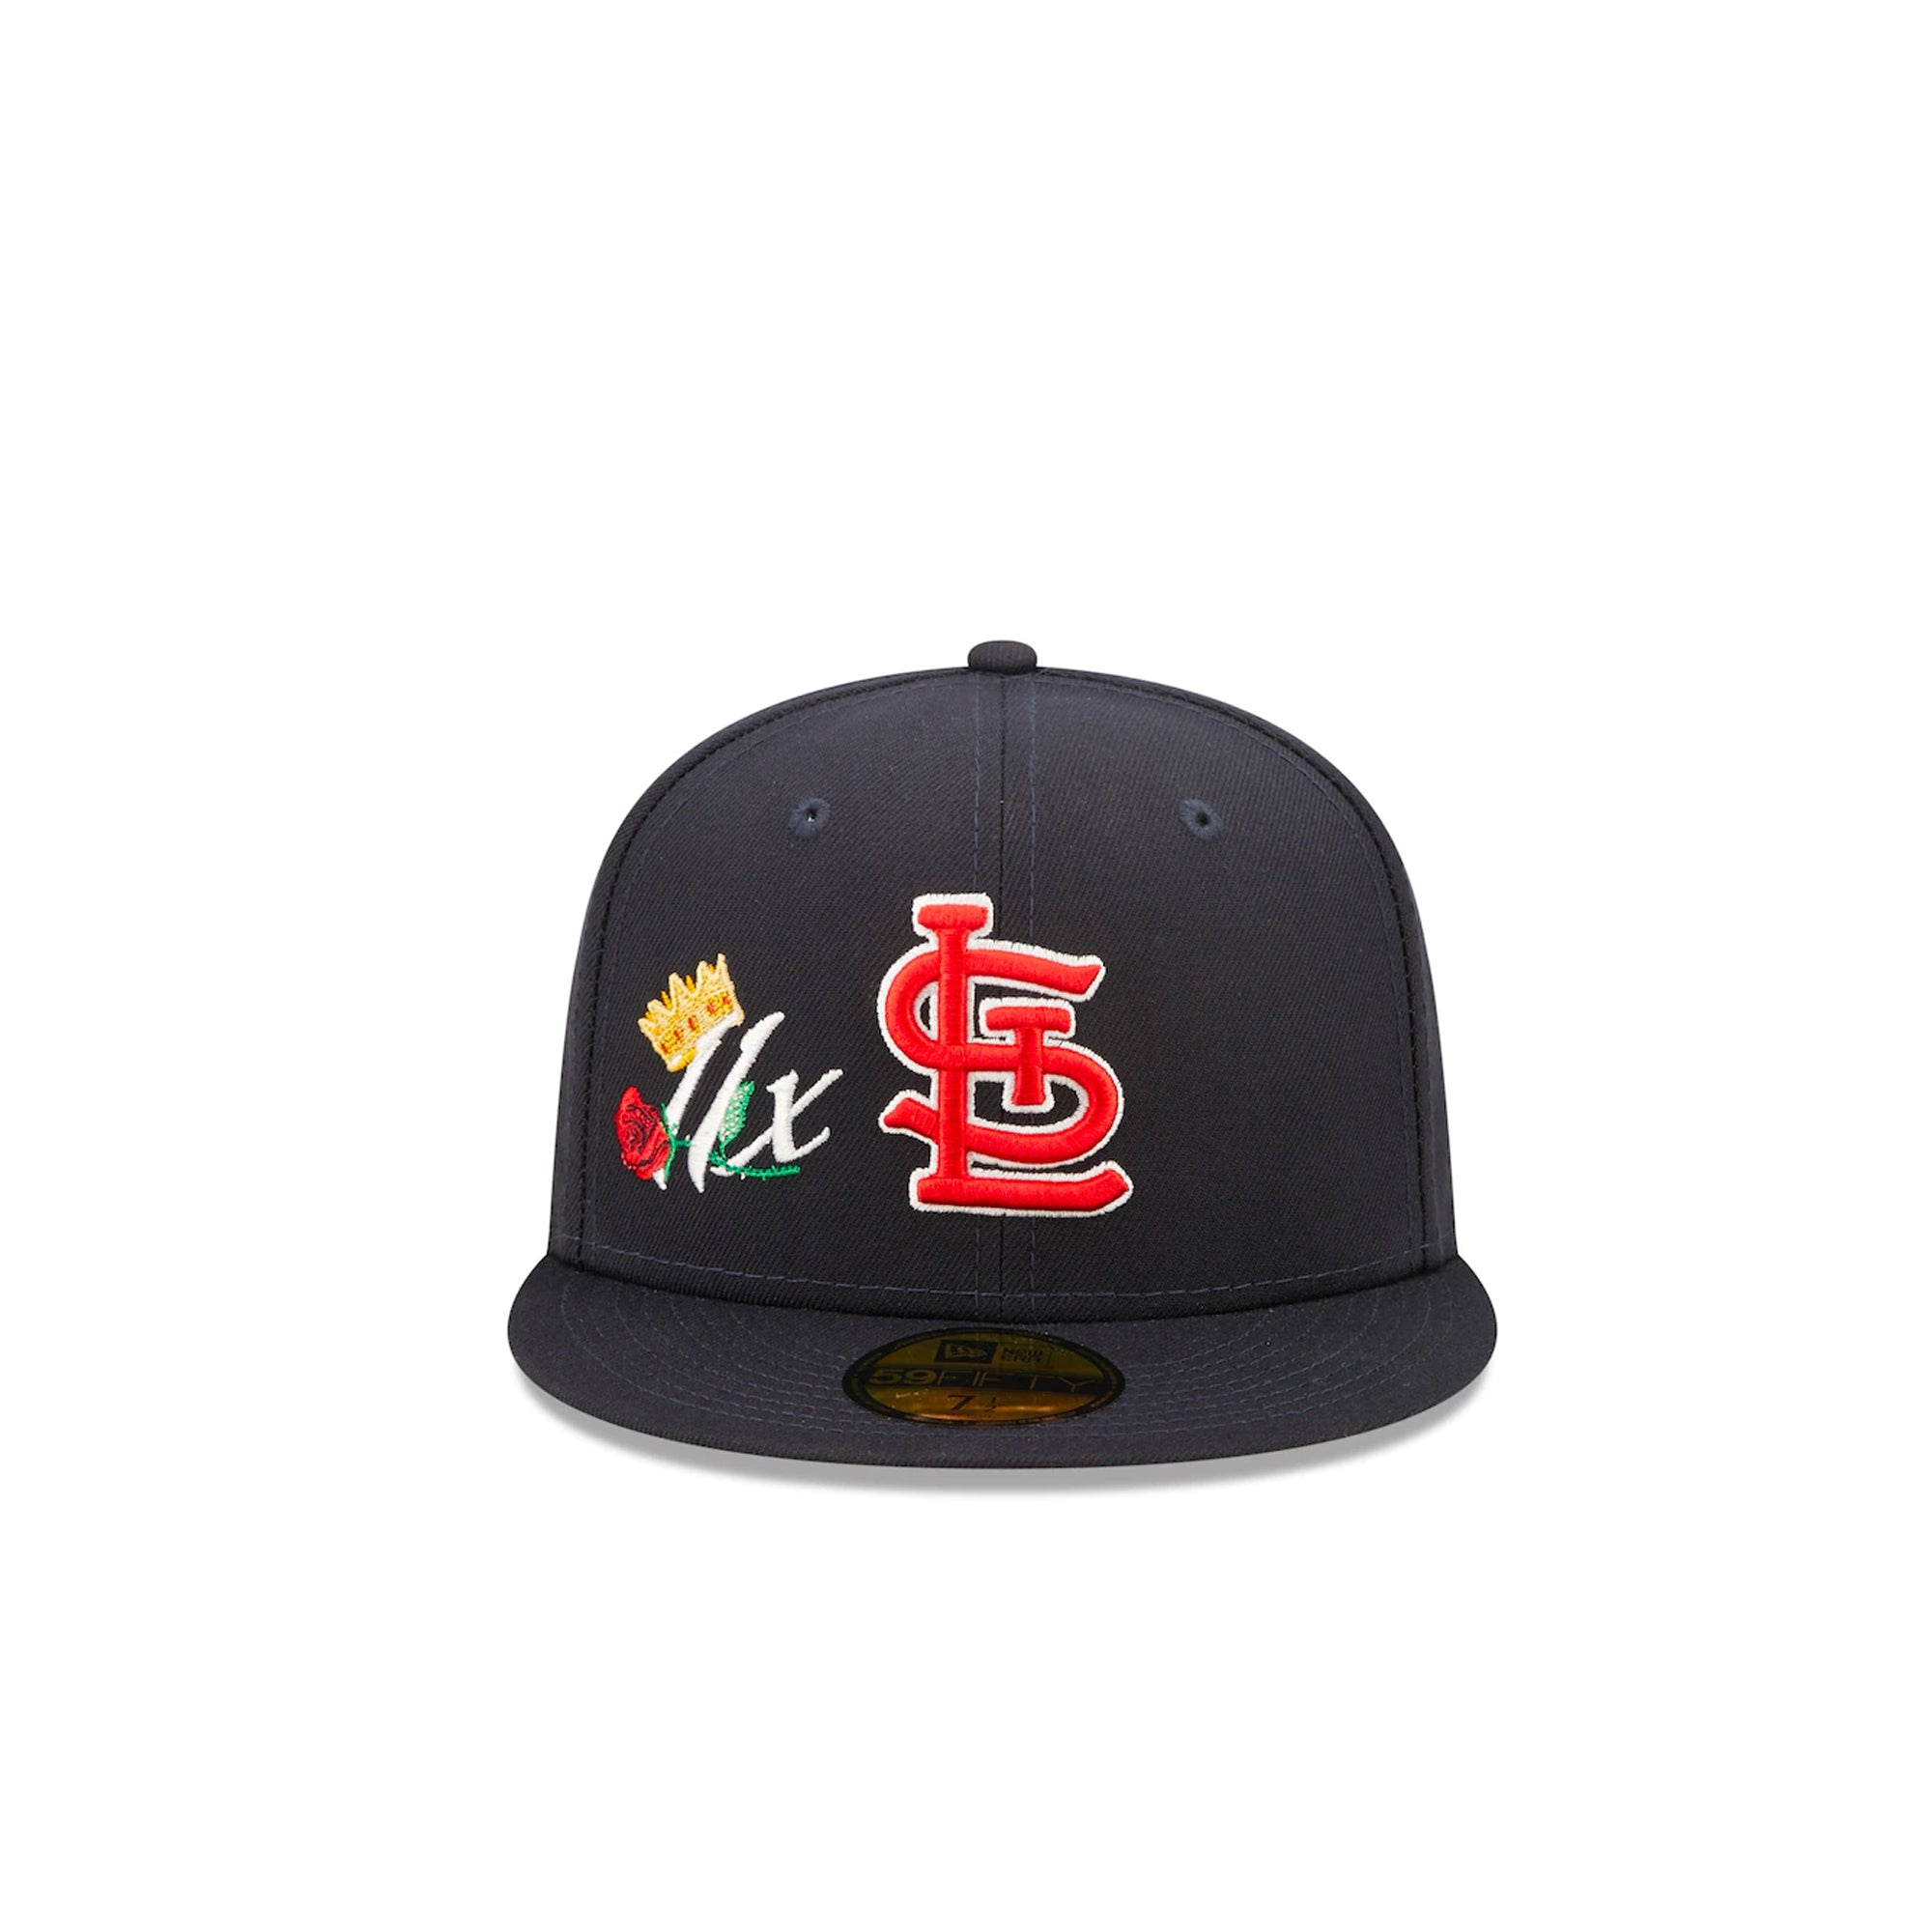 Men's New Era Cream/Orange St. Louis Cardinals 59FIFTY Fitted Hat